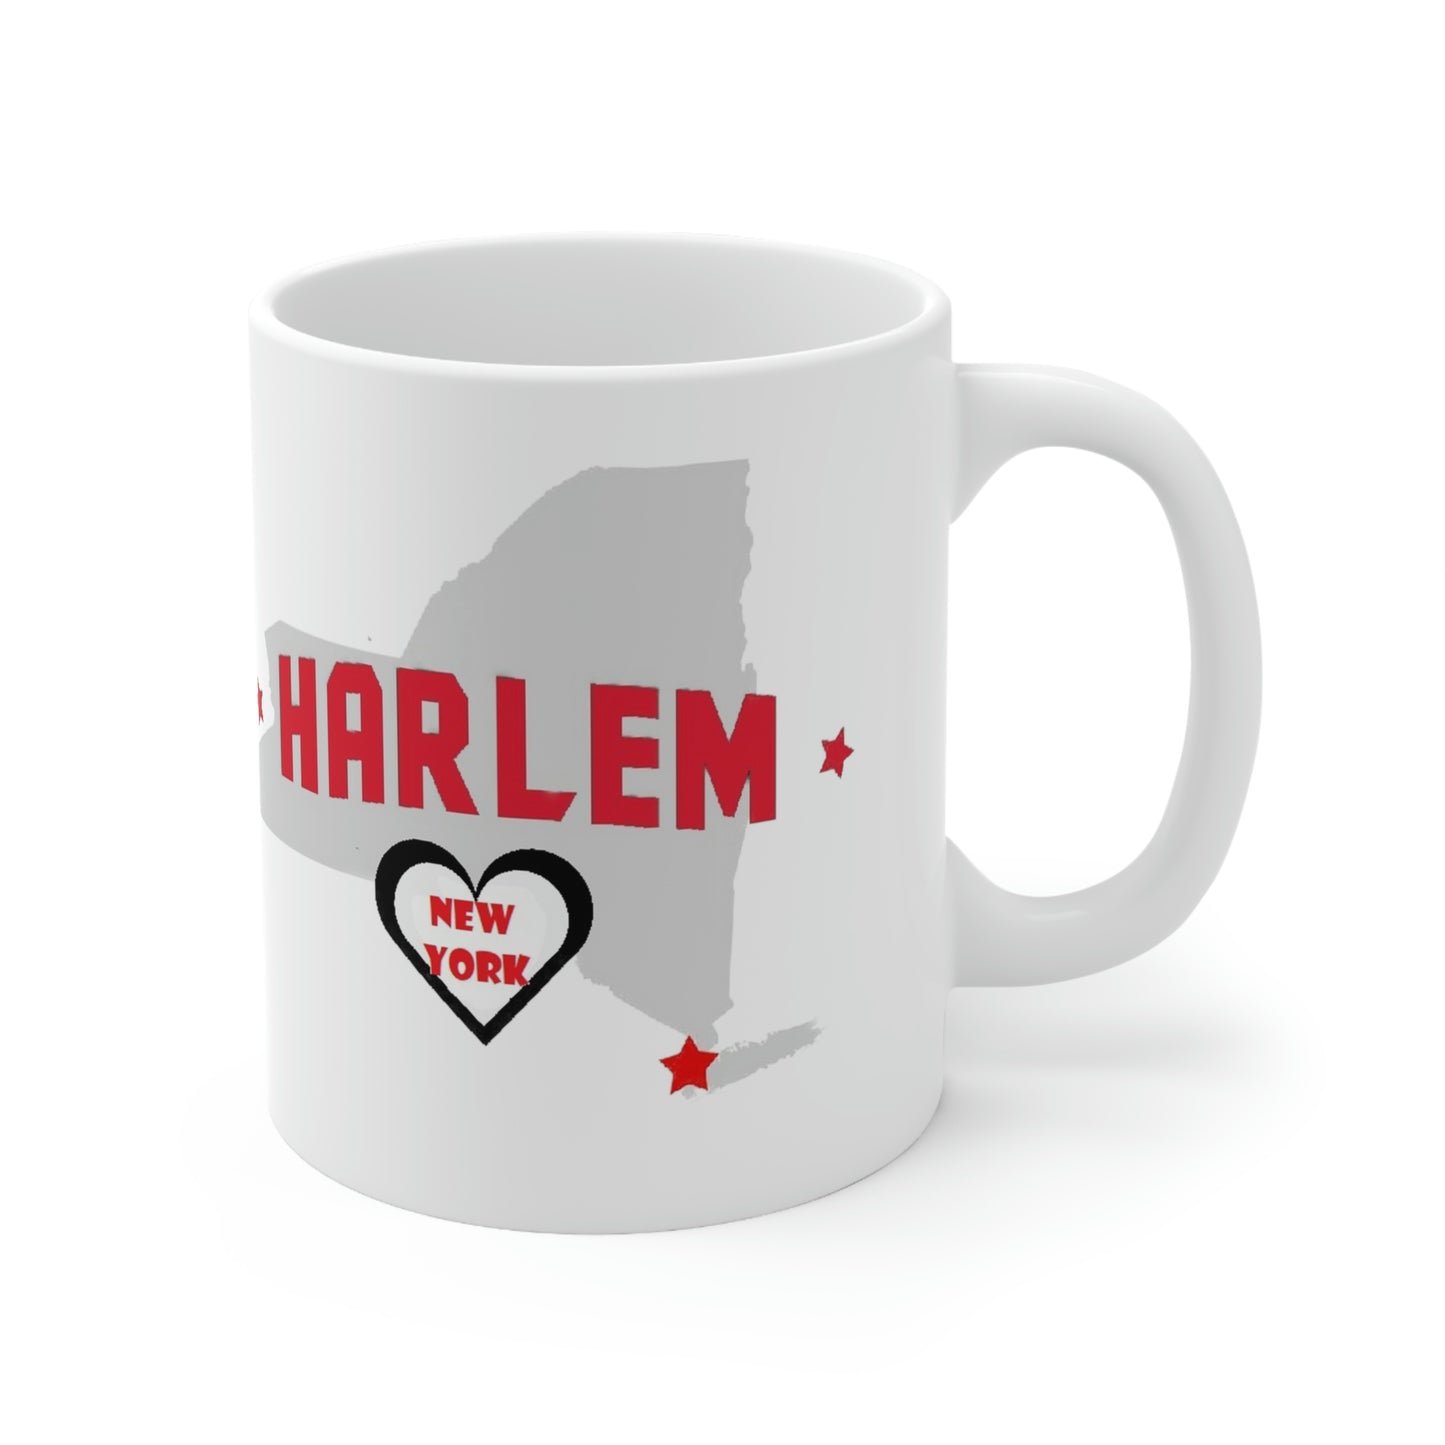 Harlem New York State Map Ceramic Mug Right View